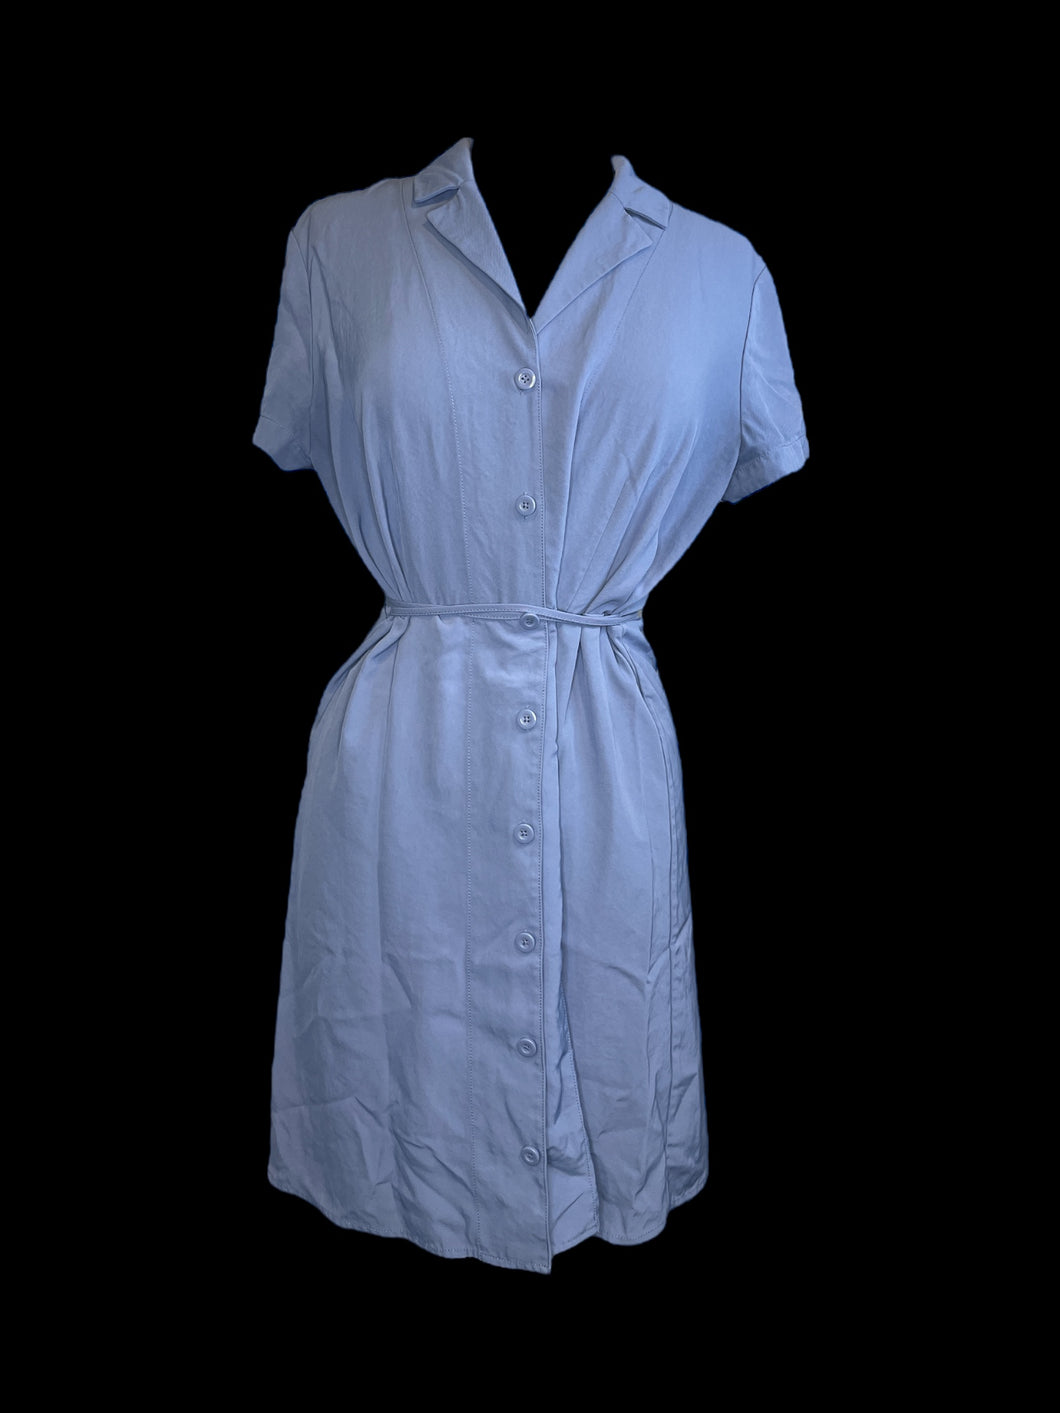 L Pale blue button-up short sleeve collared dress w/ waist tie